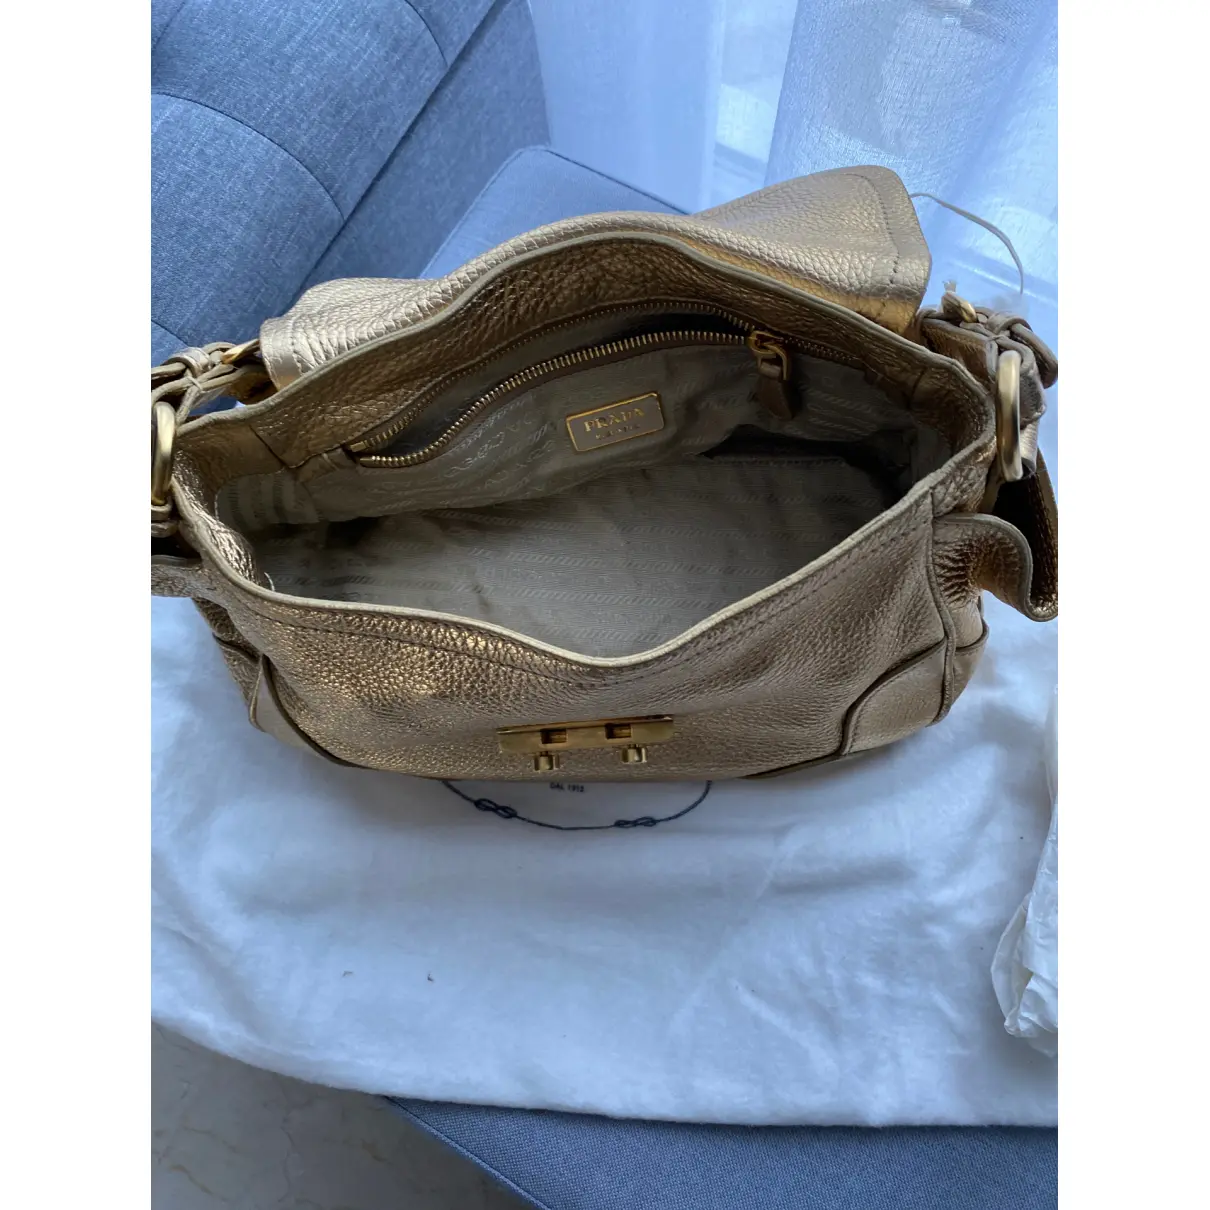 Buy Prada Leather handbag online